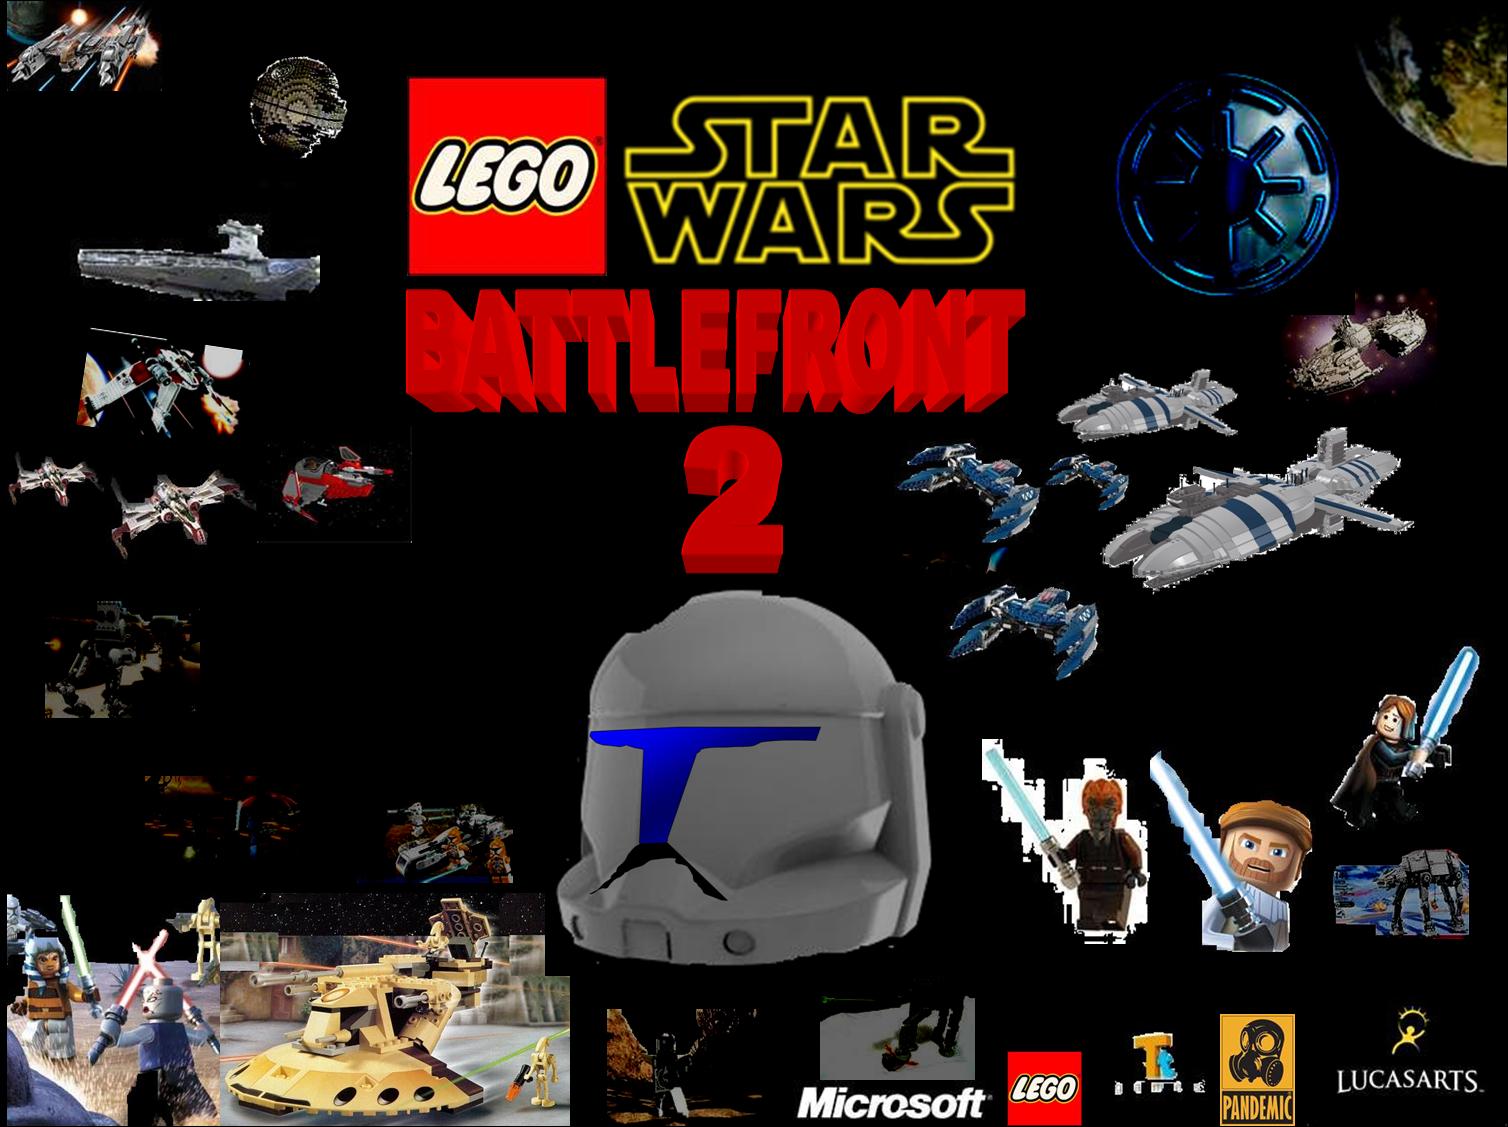 Star Wars Battlefront 2 free download